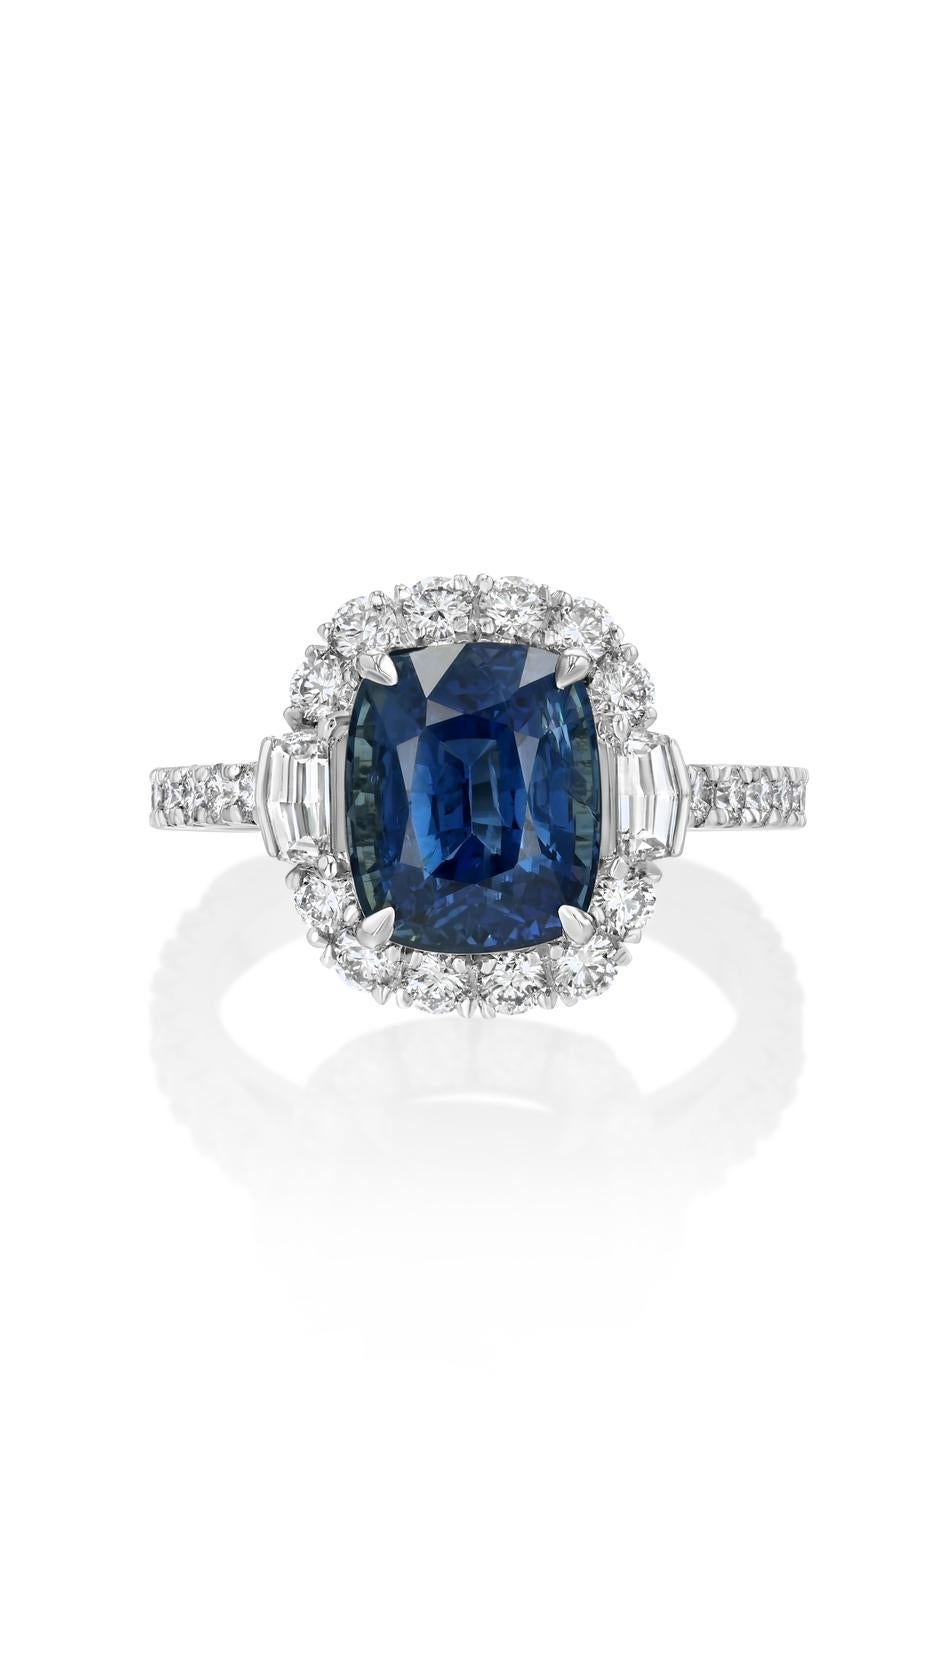 Cushion Cut 4.61ct untreated cushion-cut, blue sapphire ring. GIA certified. For Sale